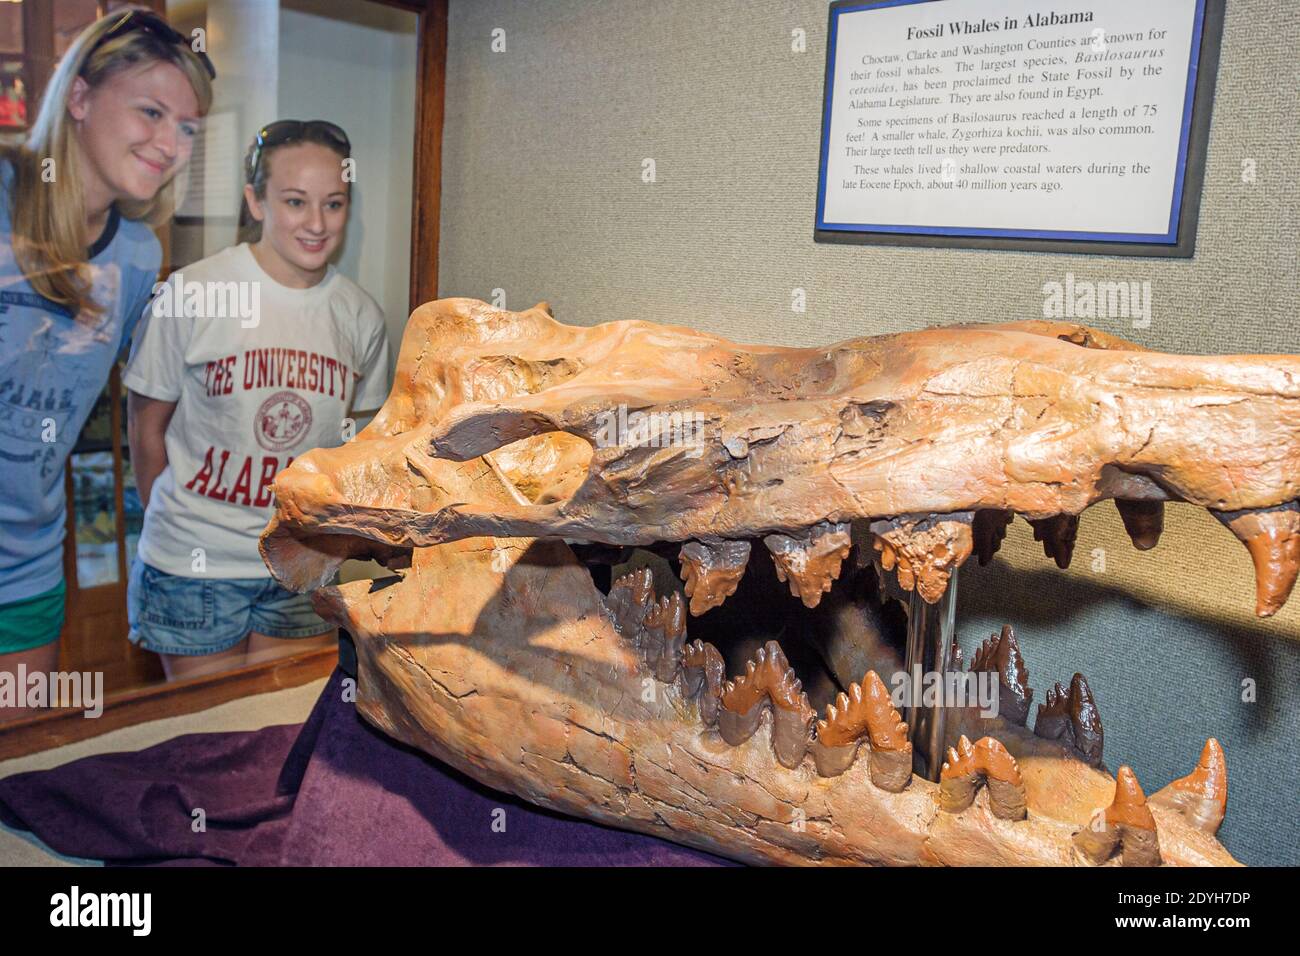 Tuscaloosa Alabama,University of Alabama Museum of Natural History,fossil whale women looking, Stock Photo